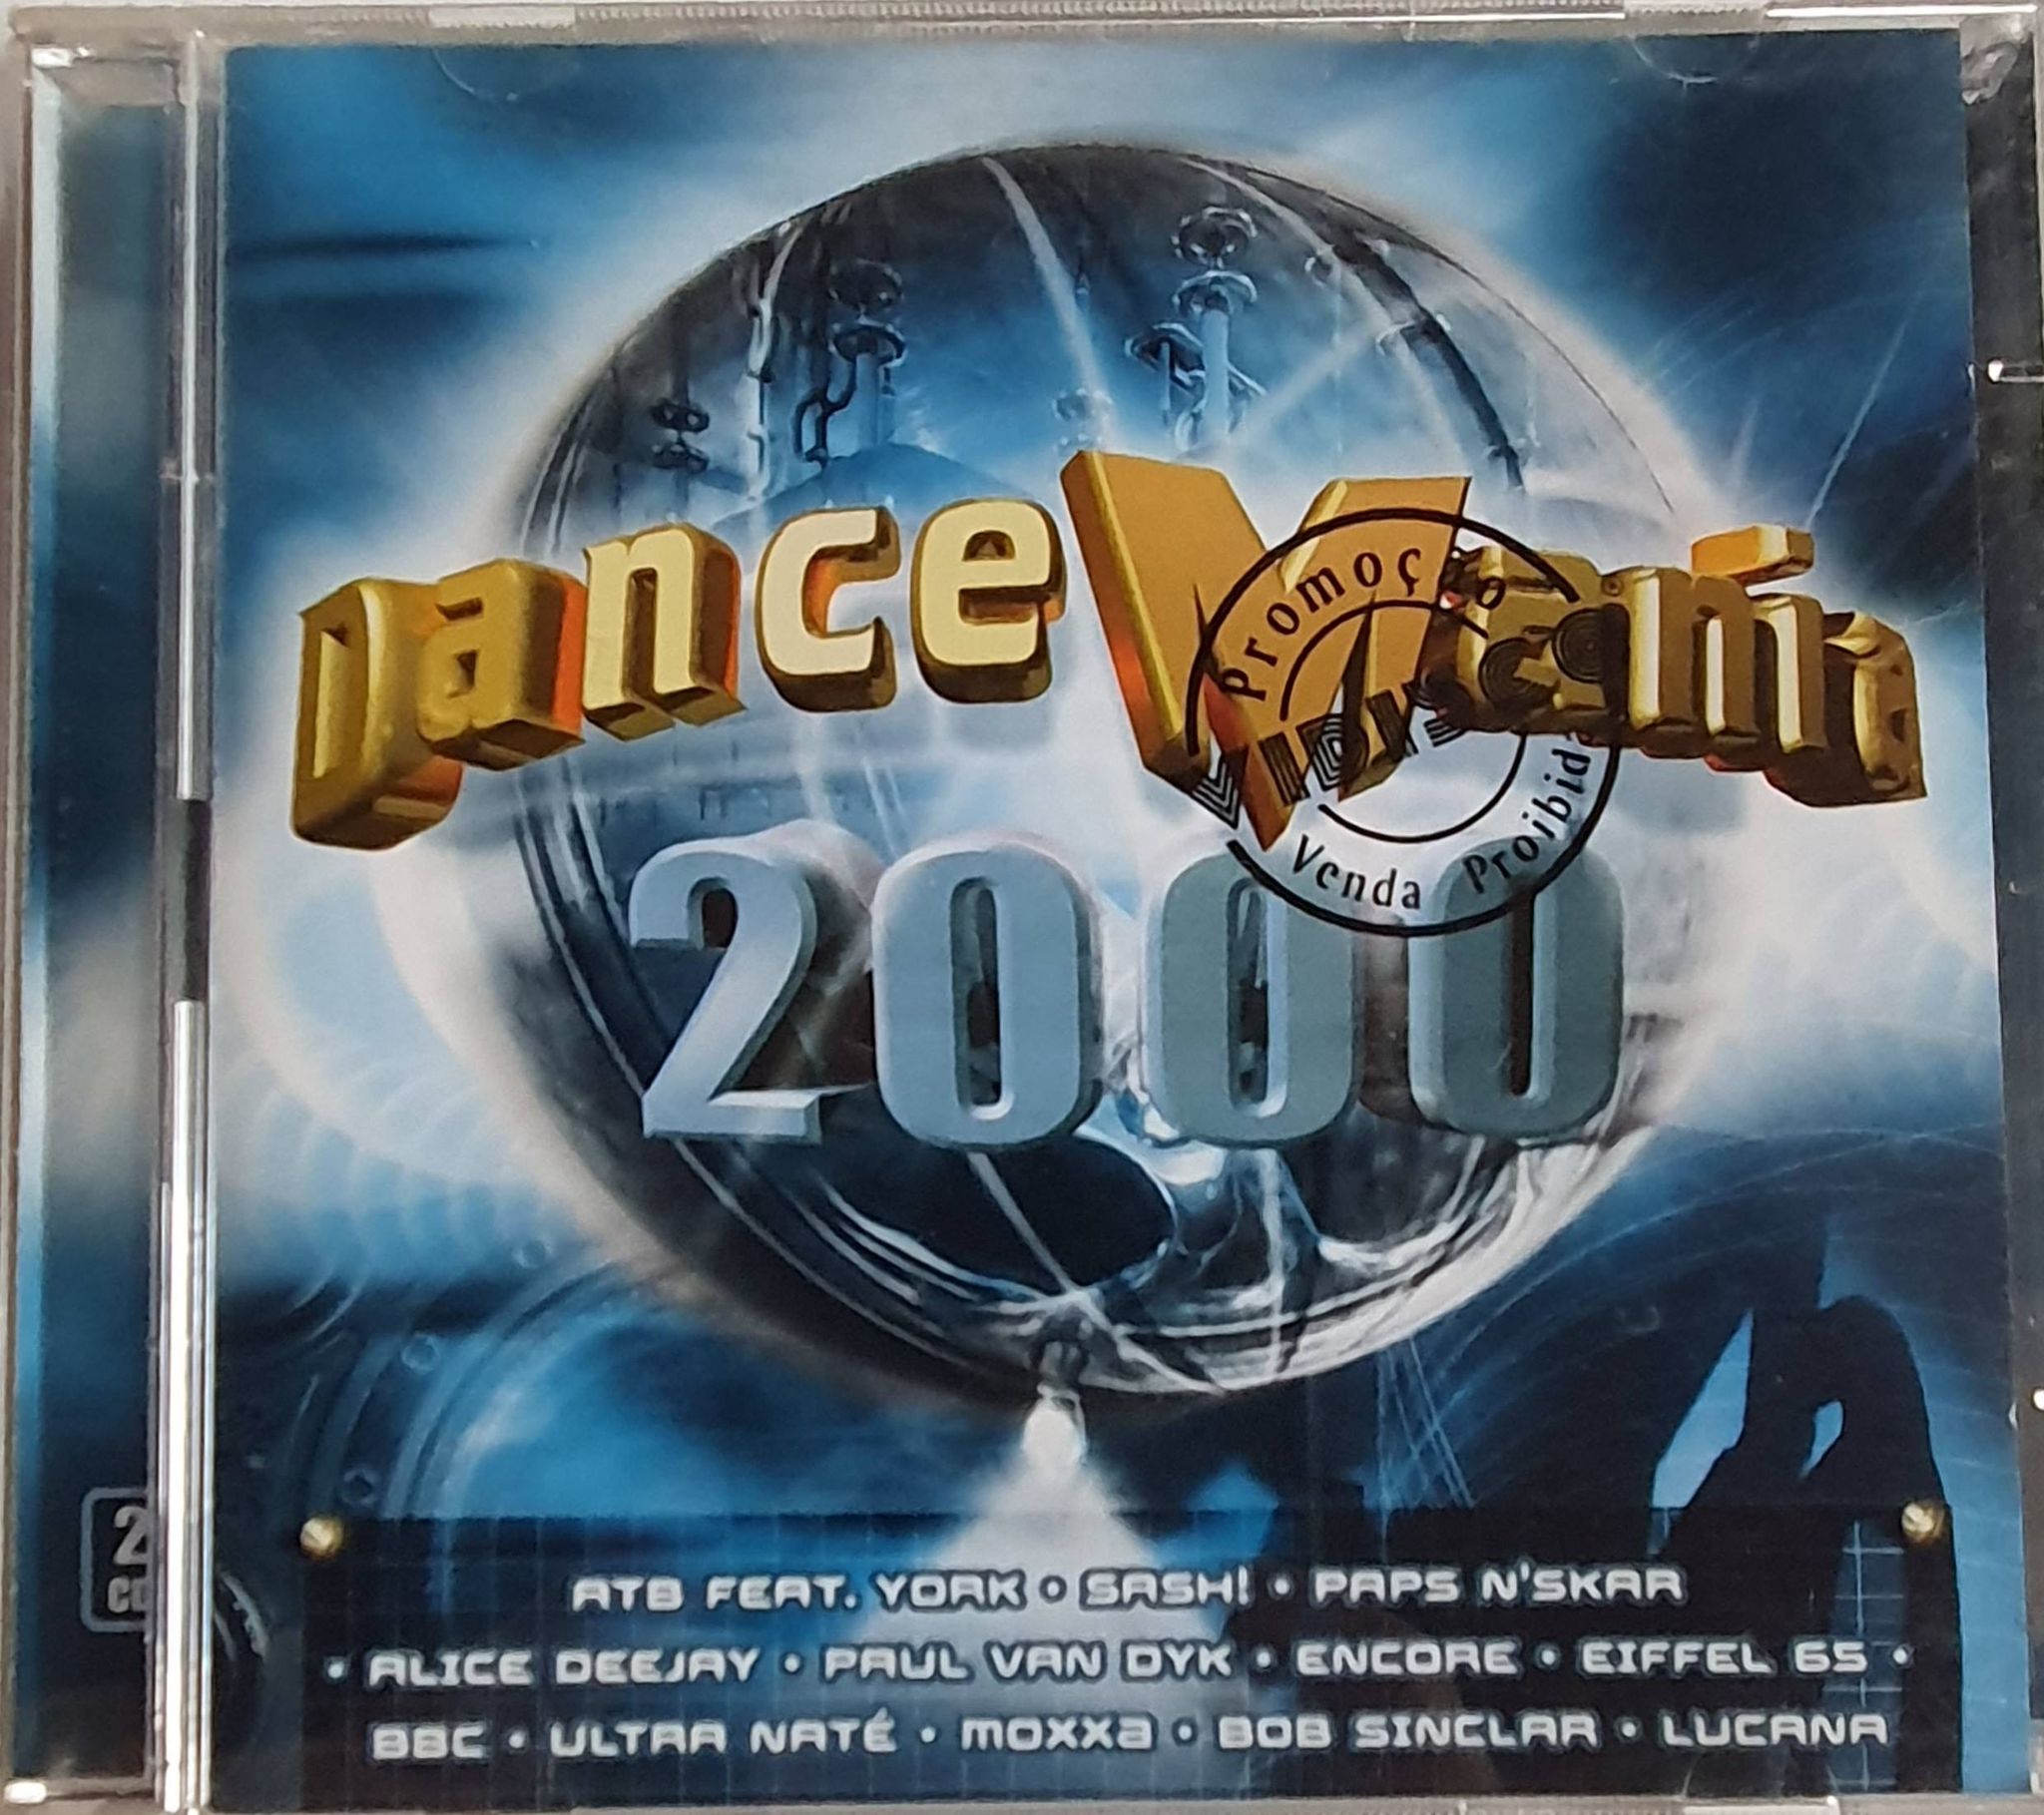 Dance Music Anos 2000